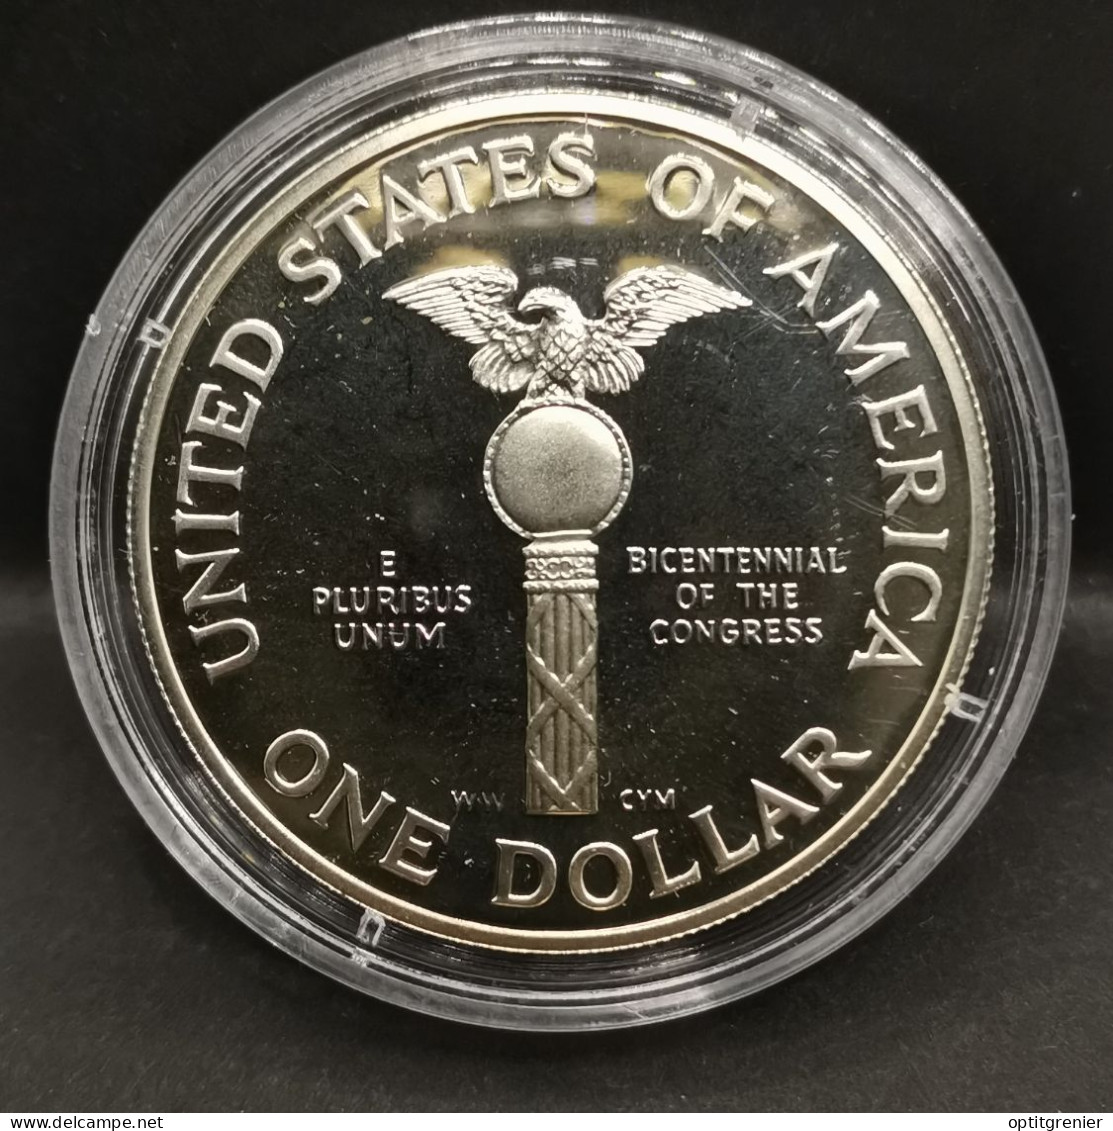 1 DOLLAR ARGENT BE 1989 S CONGRES USA / SILVER PROOF - Non Classés